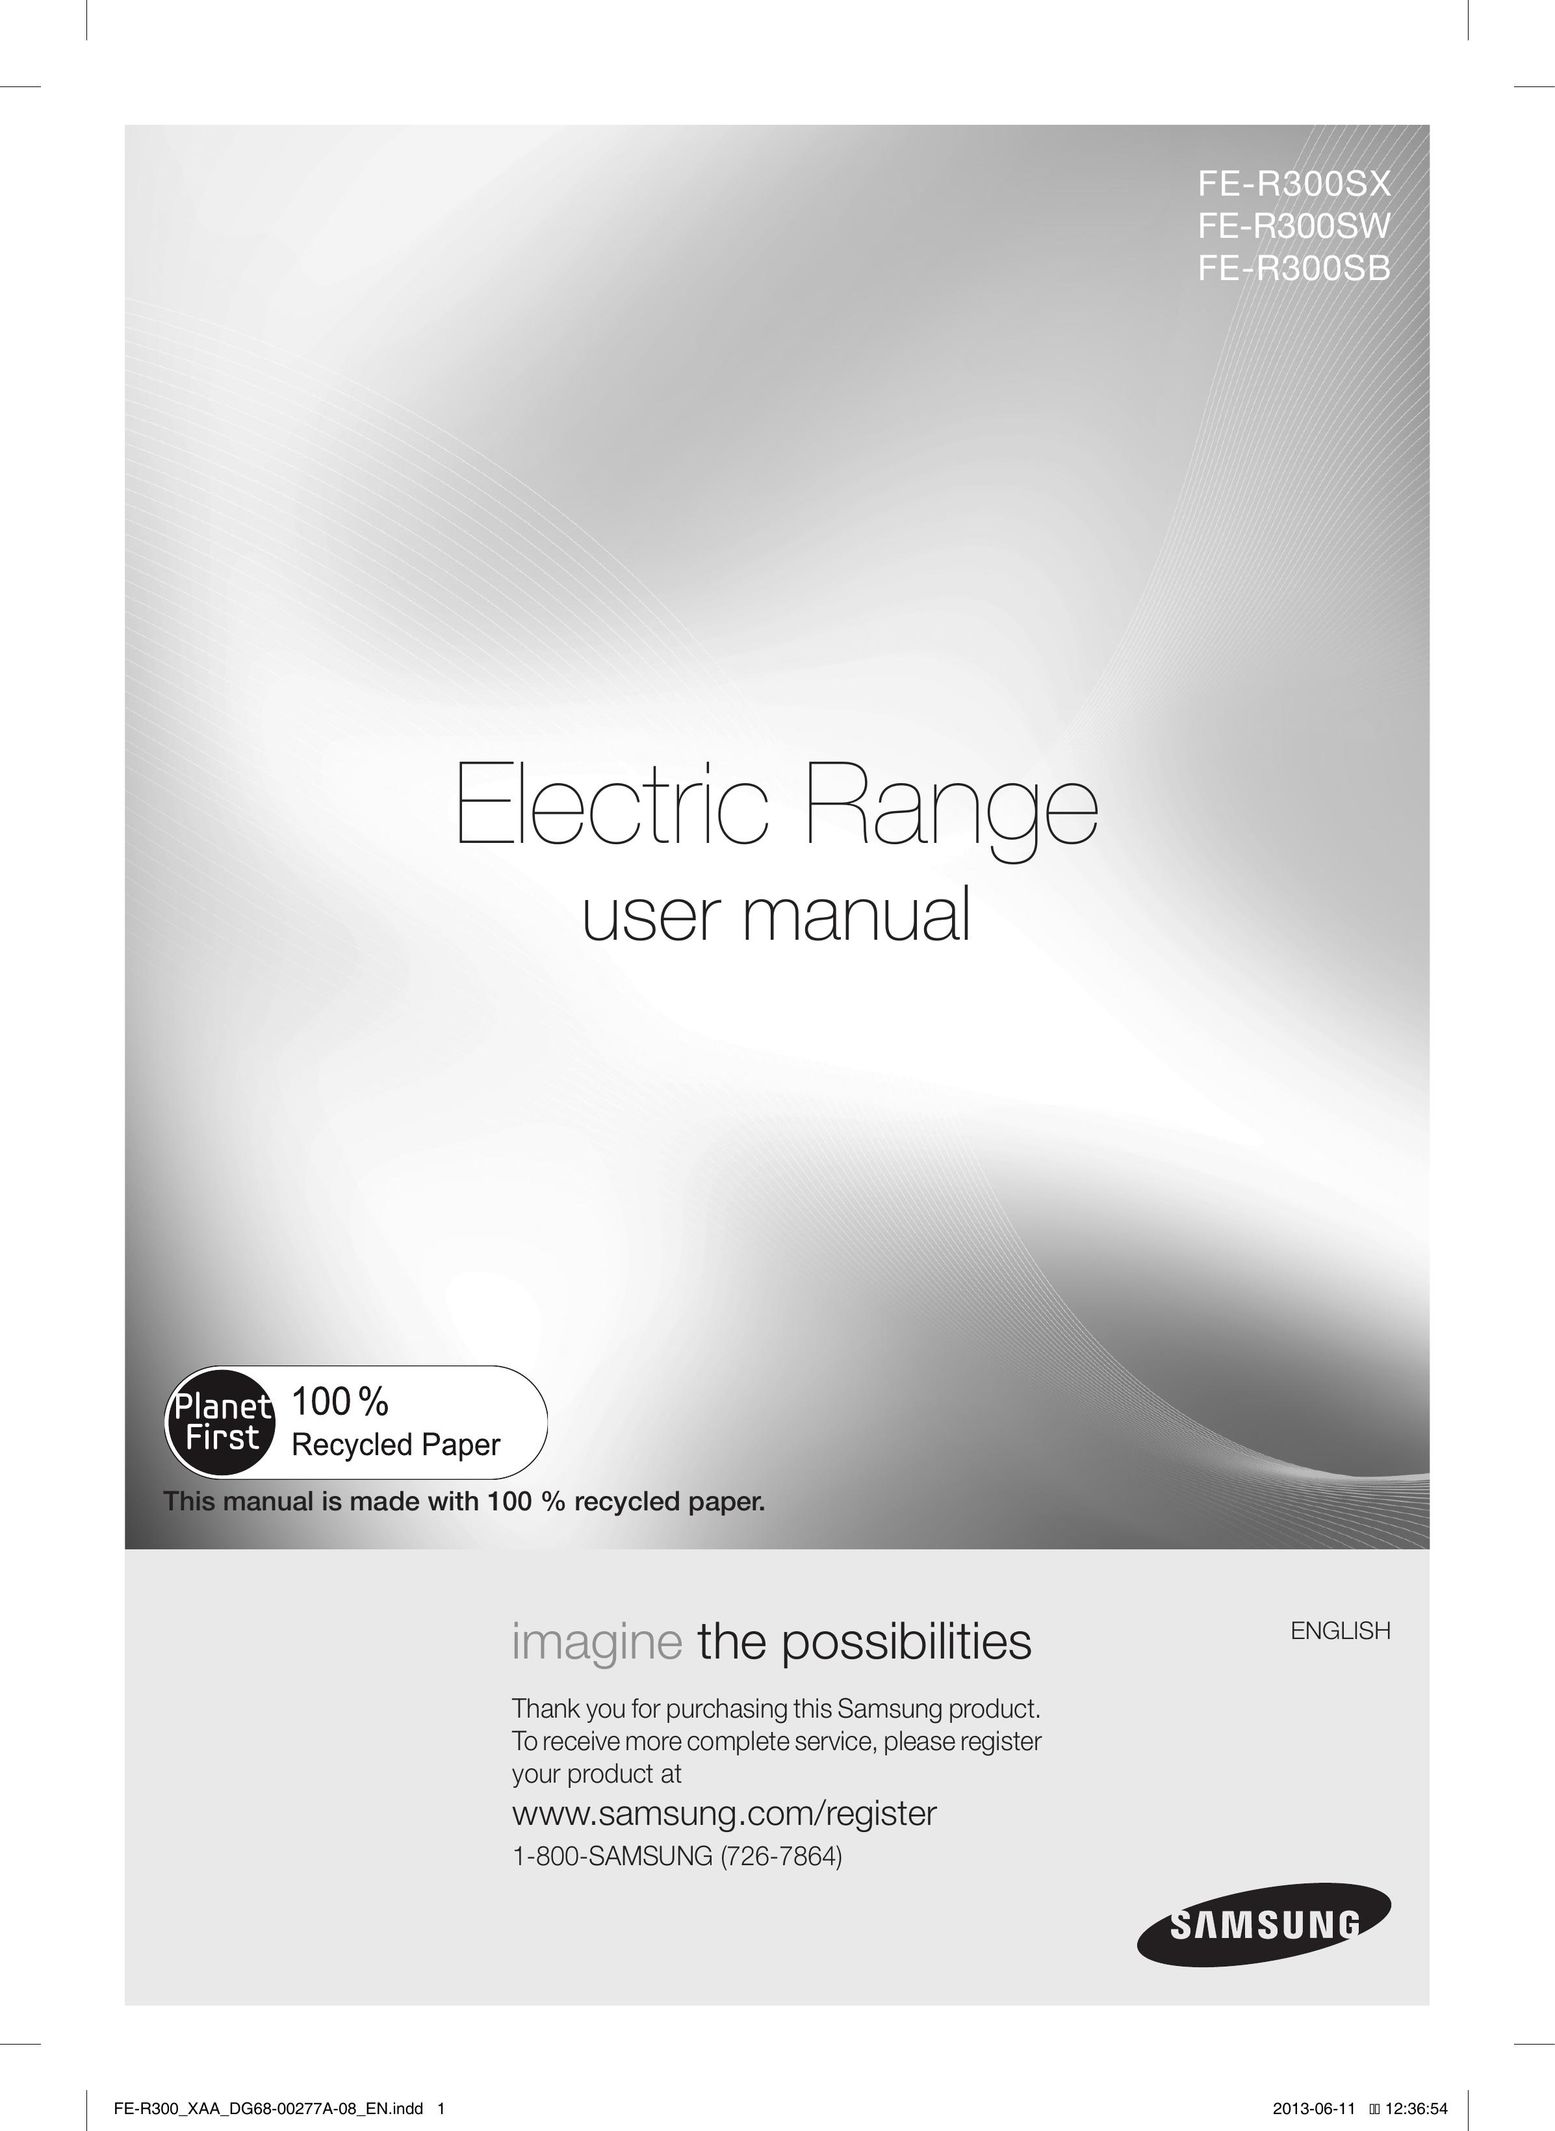 Samsung FER300SW Range User Manual